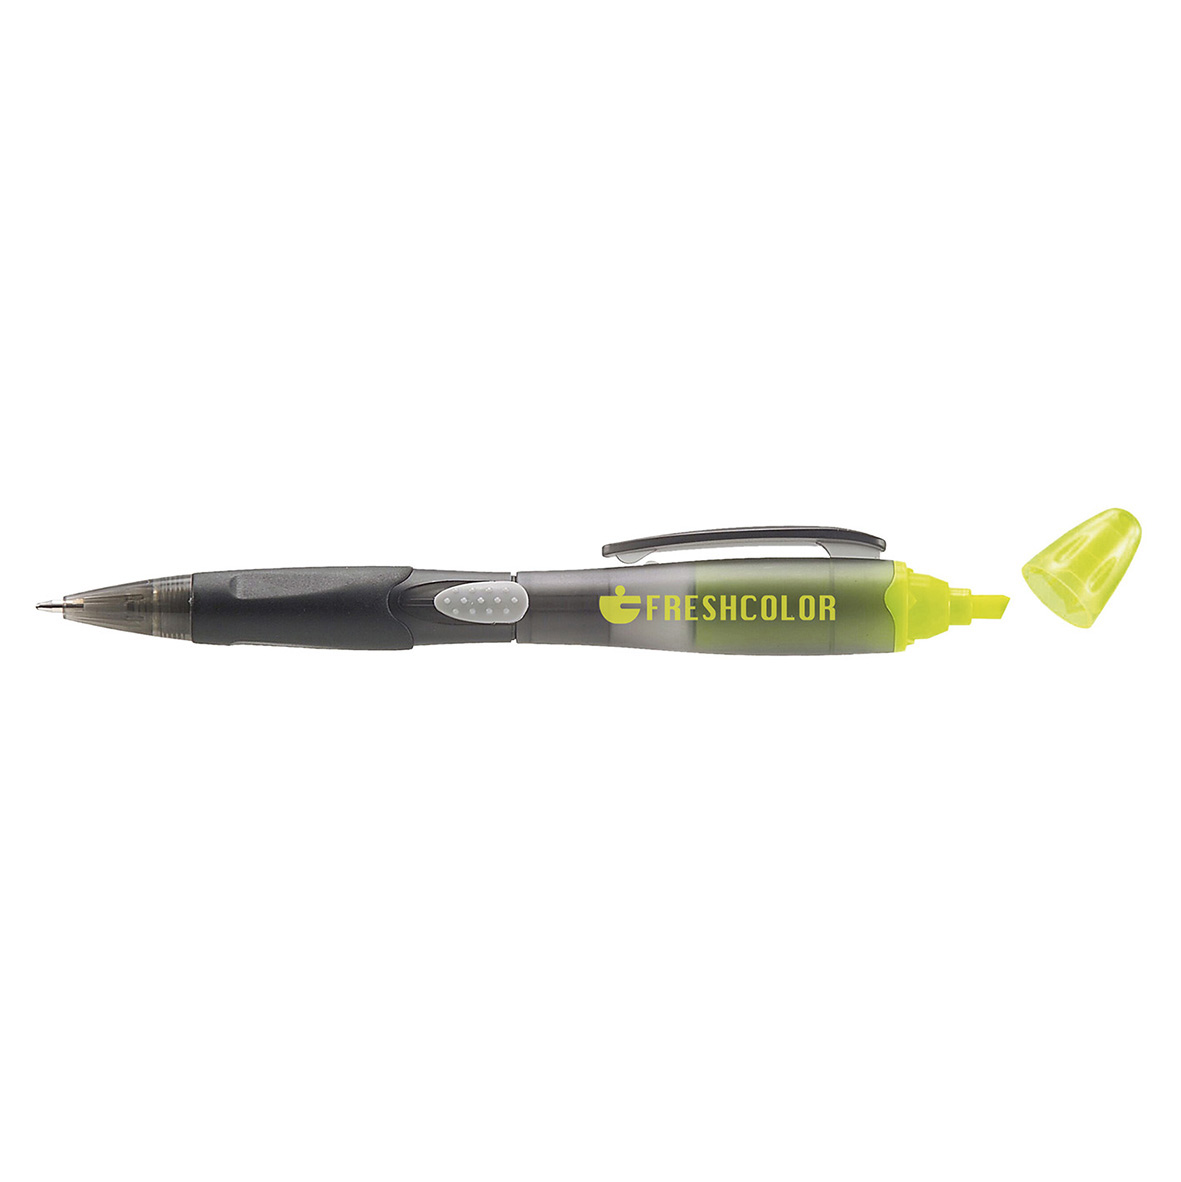 stylo fluo publicitaire cote613 - techno - stylo multifonction